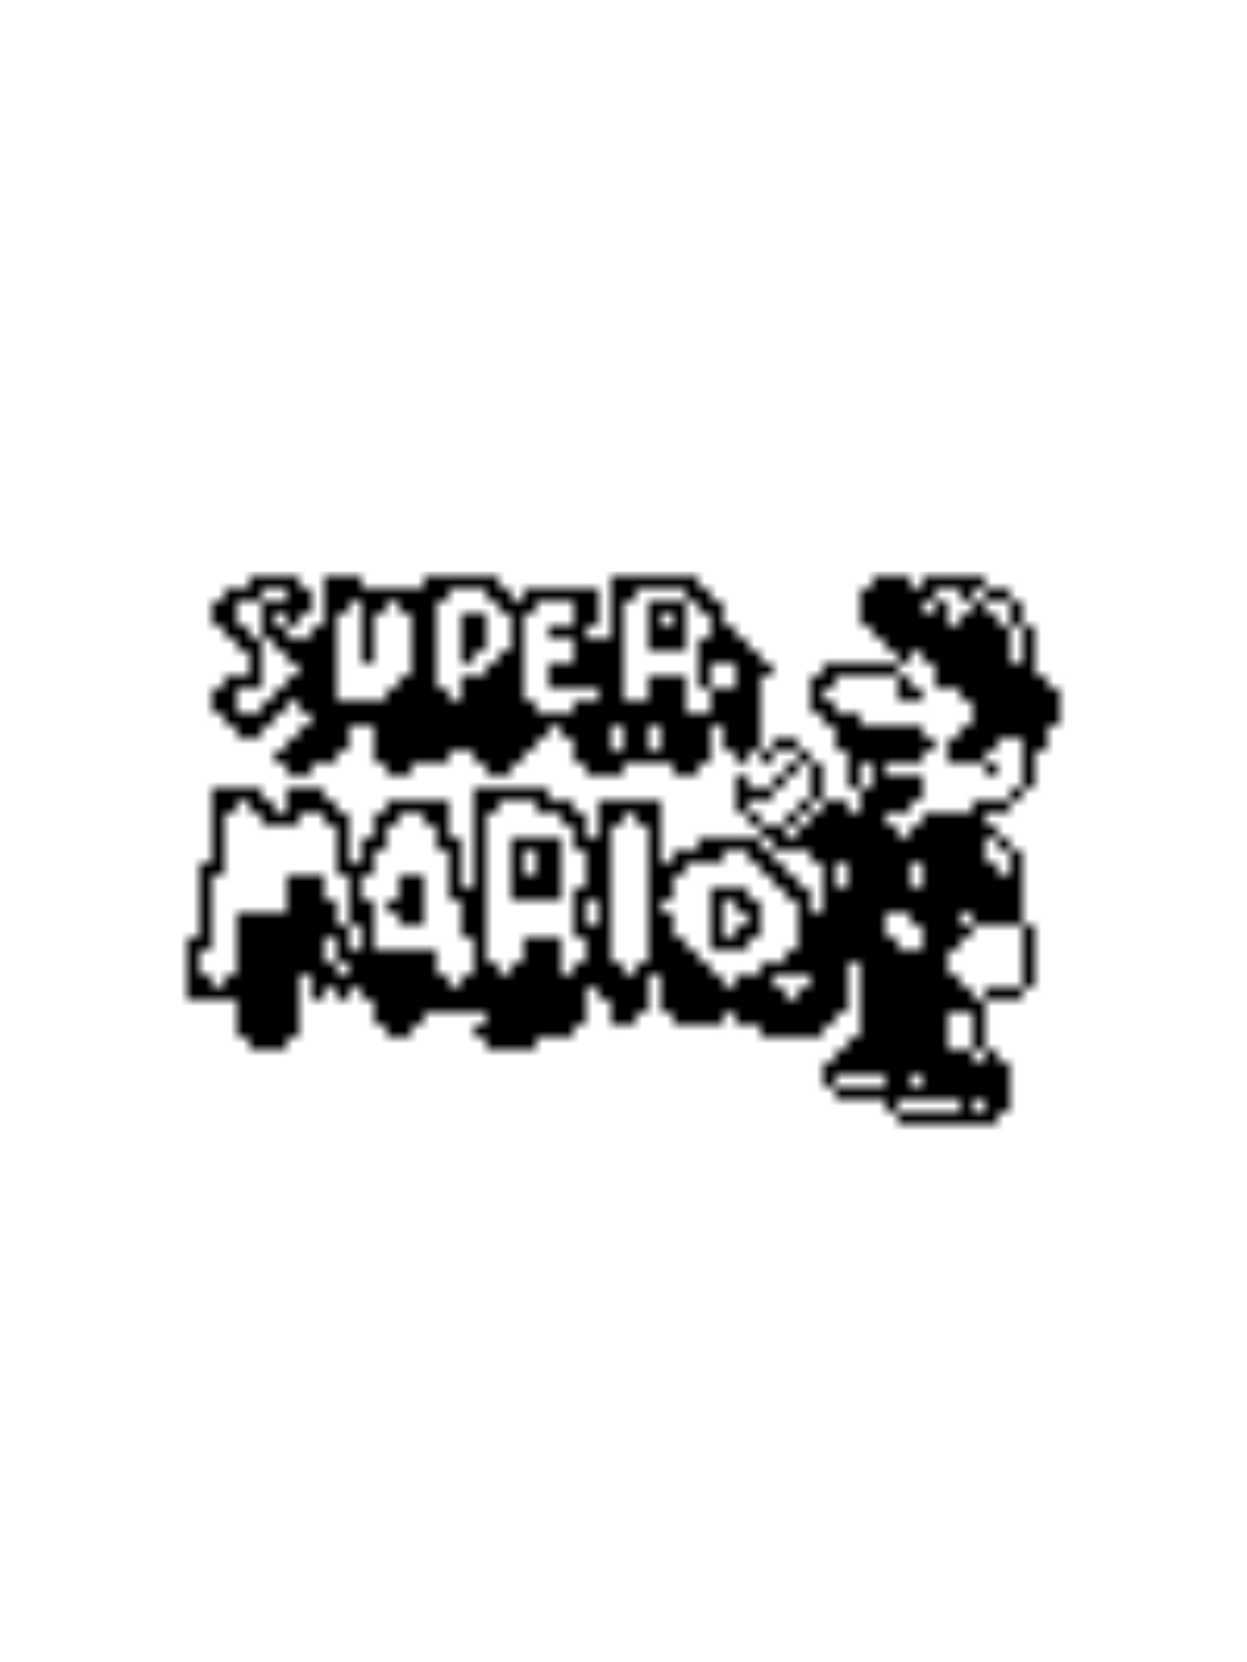 Super Mario cover